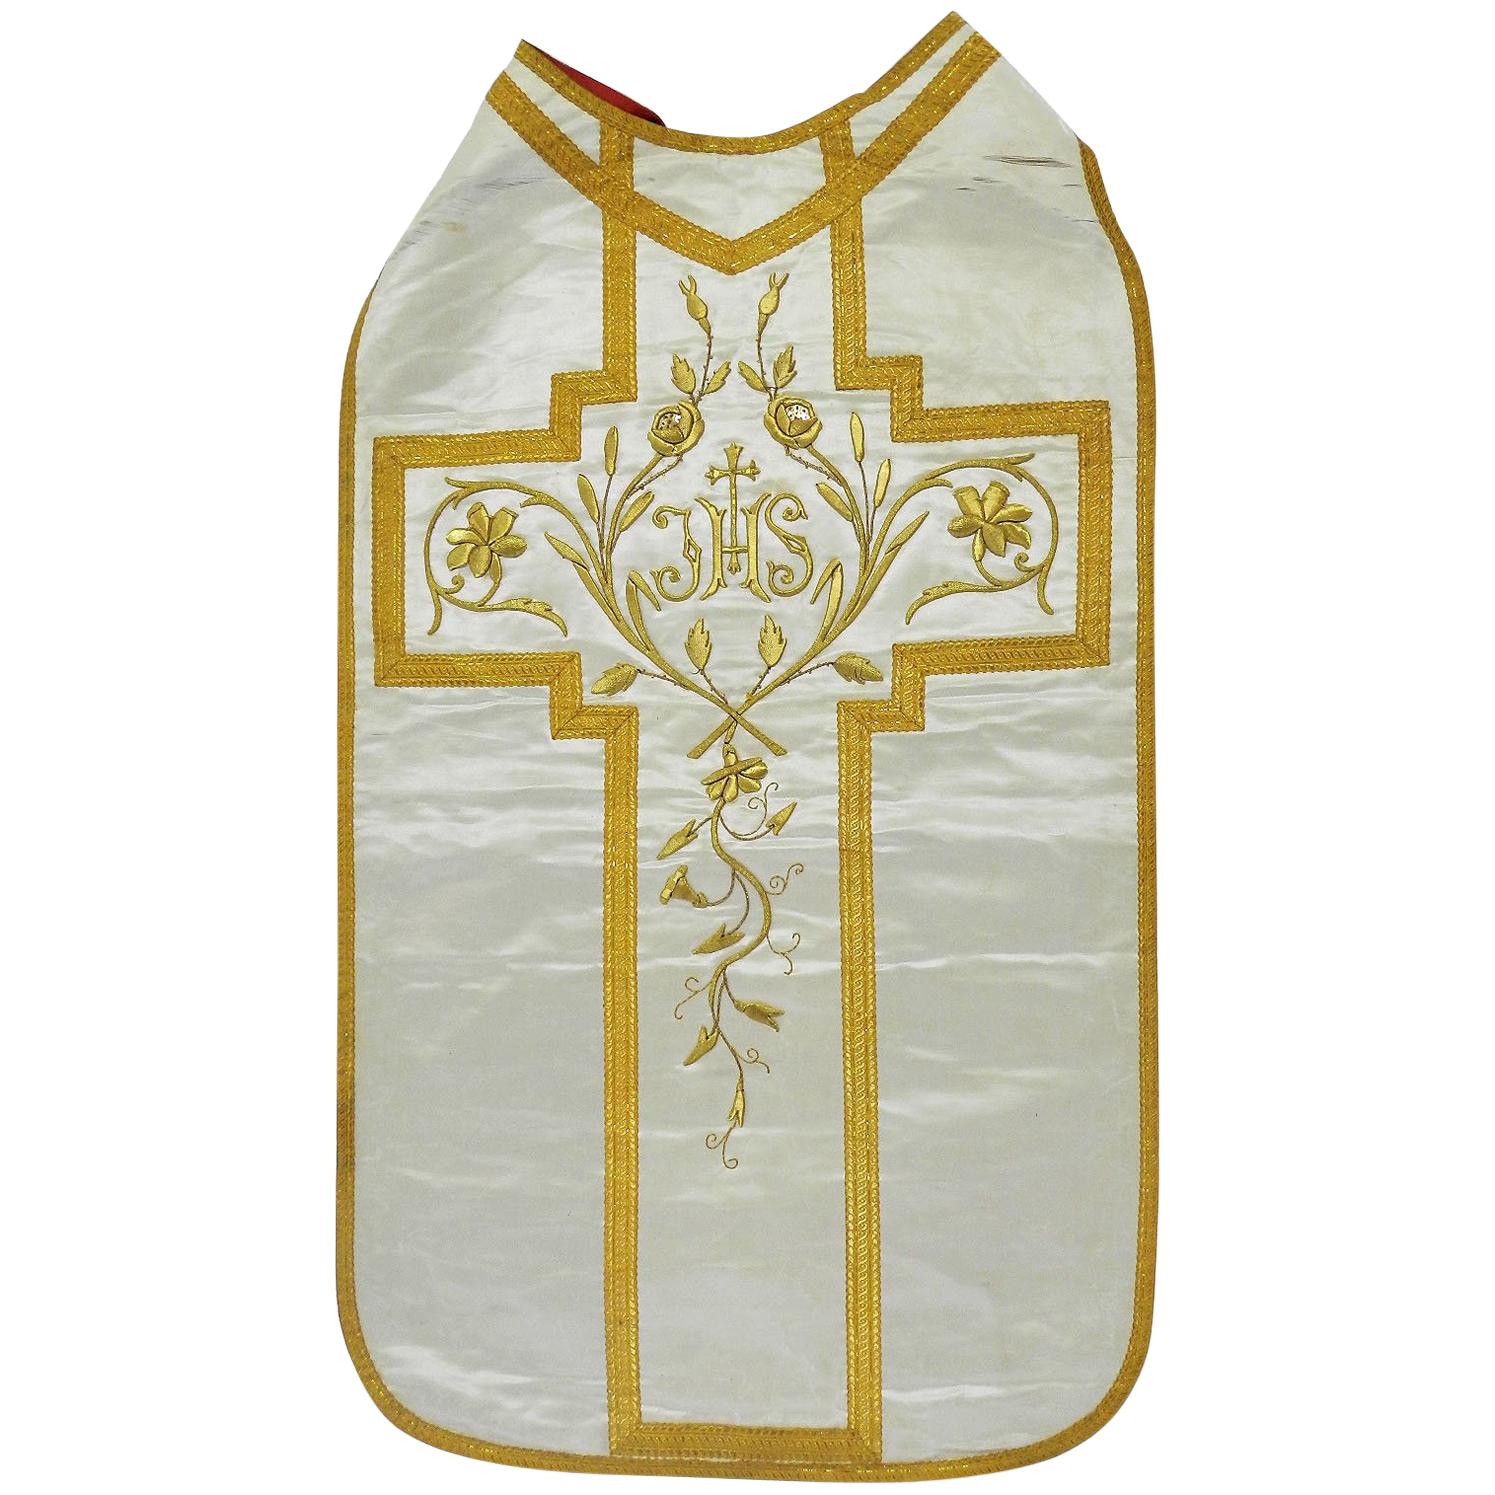 Antique Chasuble Religious Vestment Embroidered Textile, circa 1890